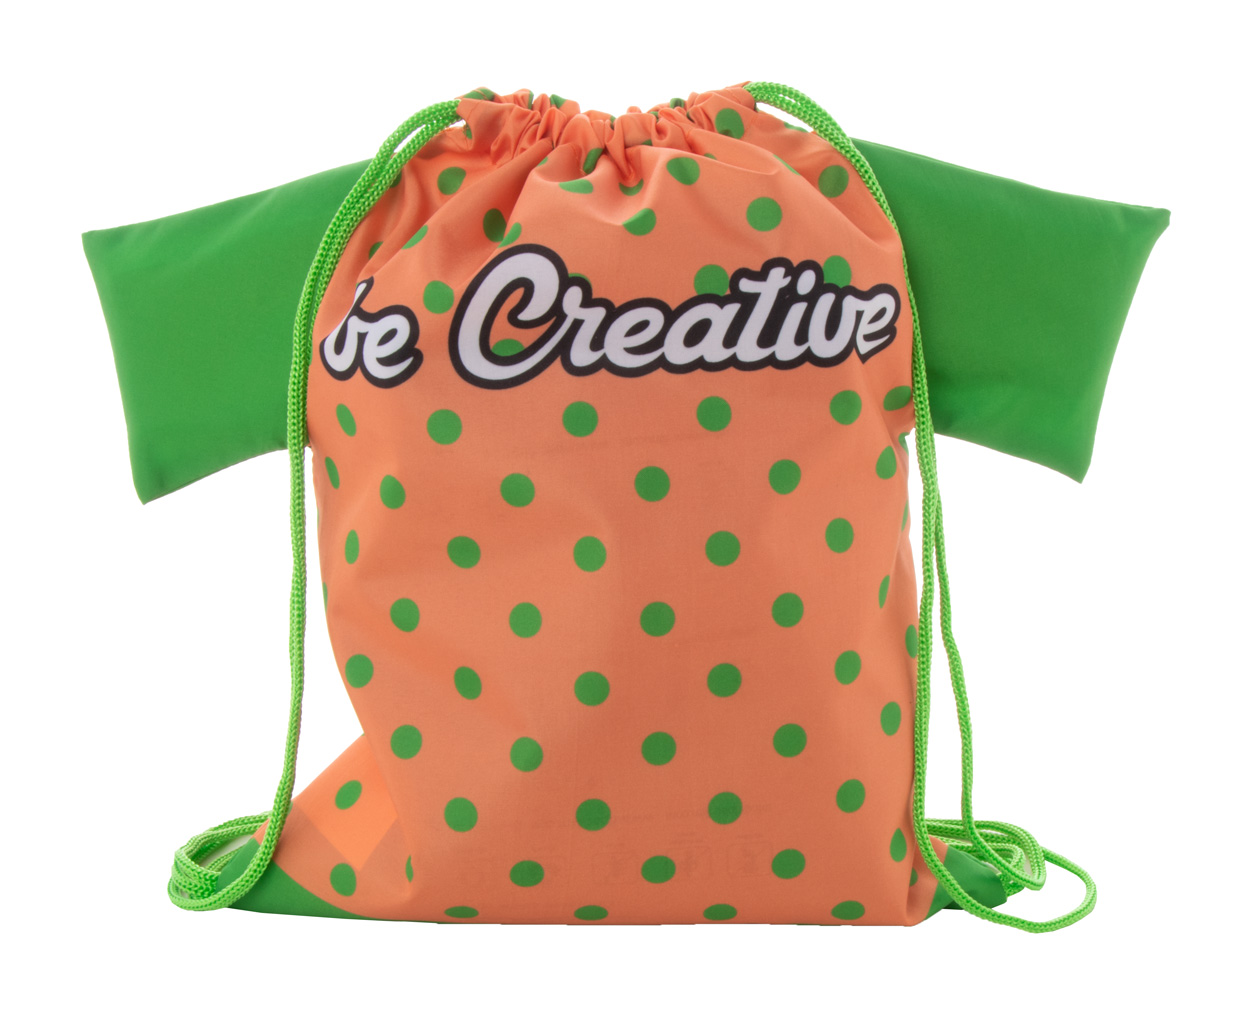 CreaDraw T Kids drawstring bag for children - green